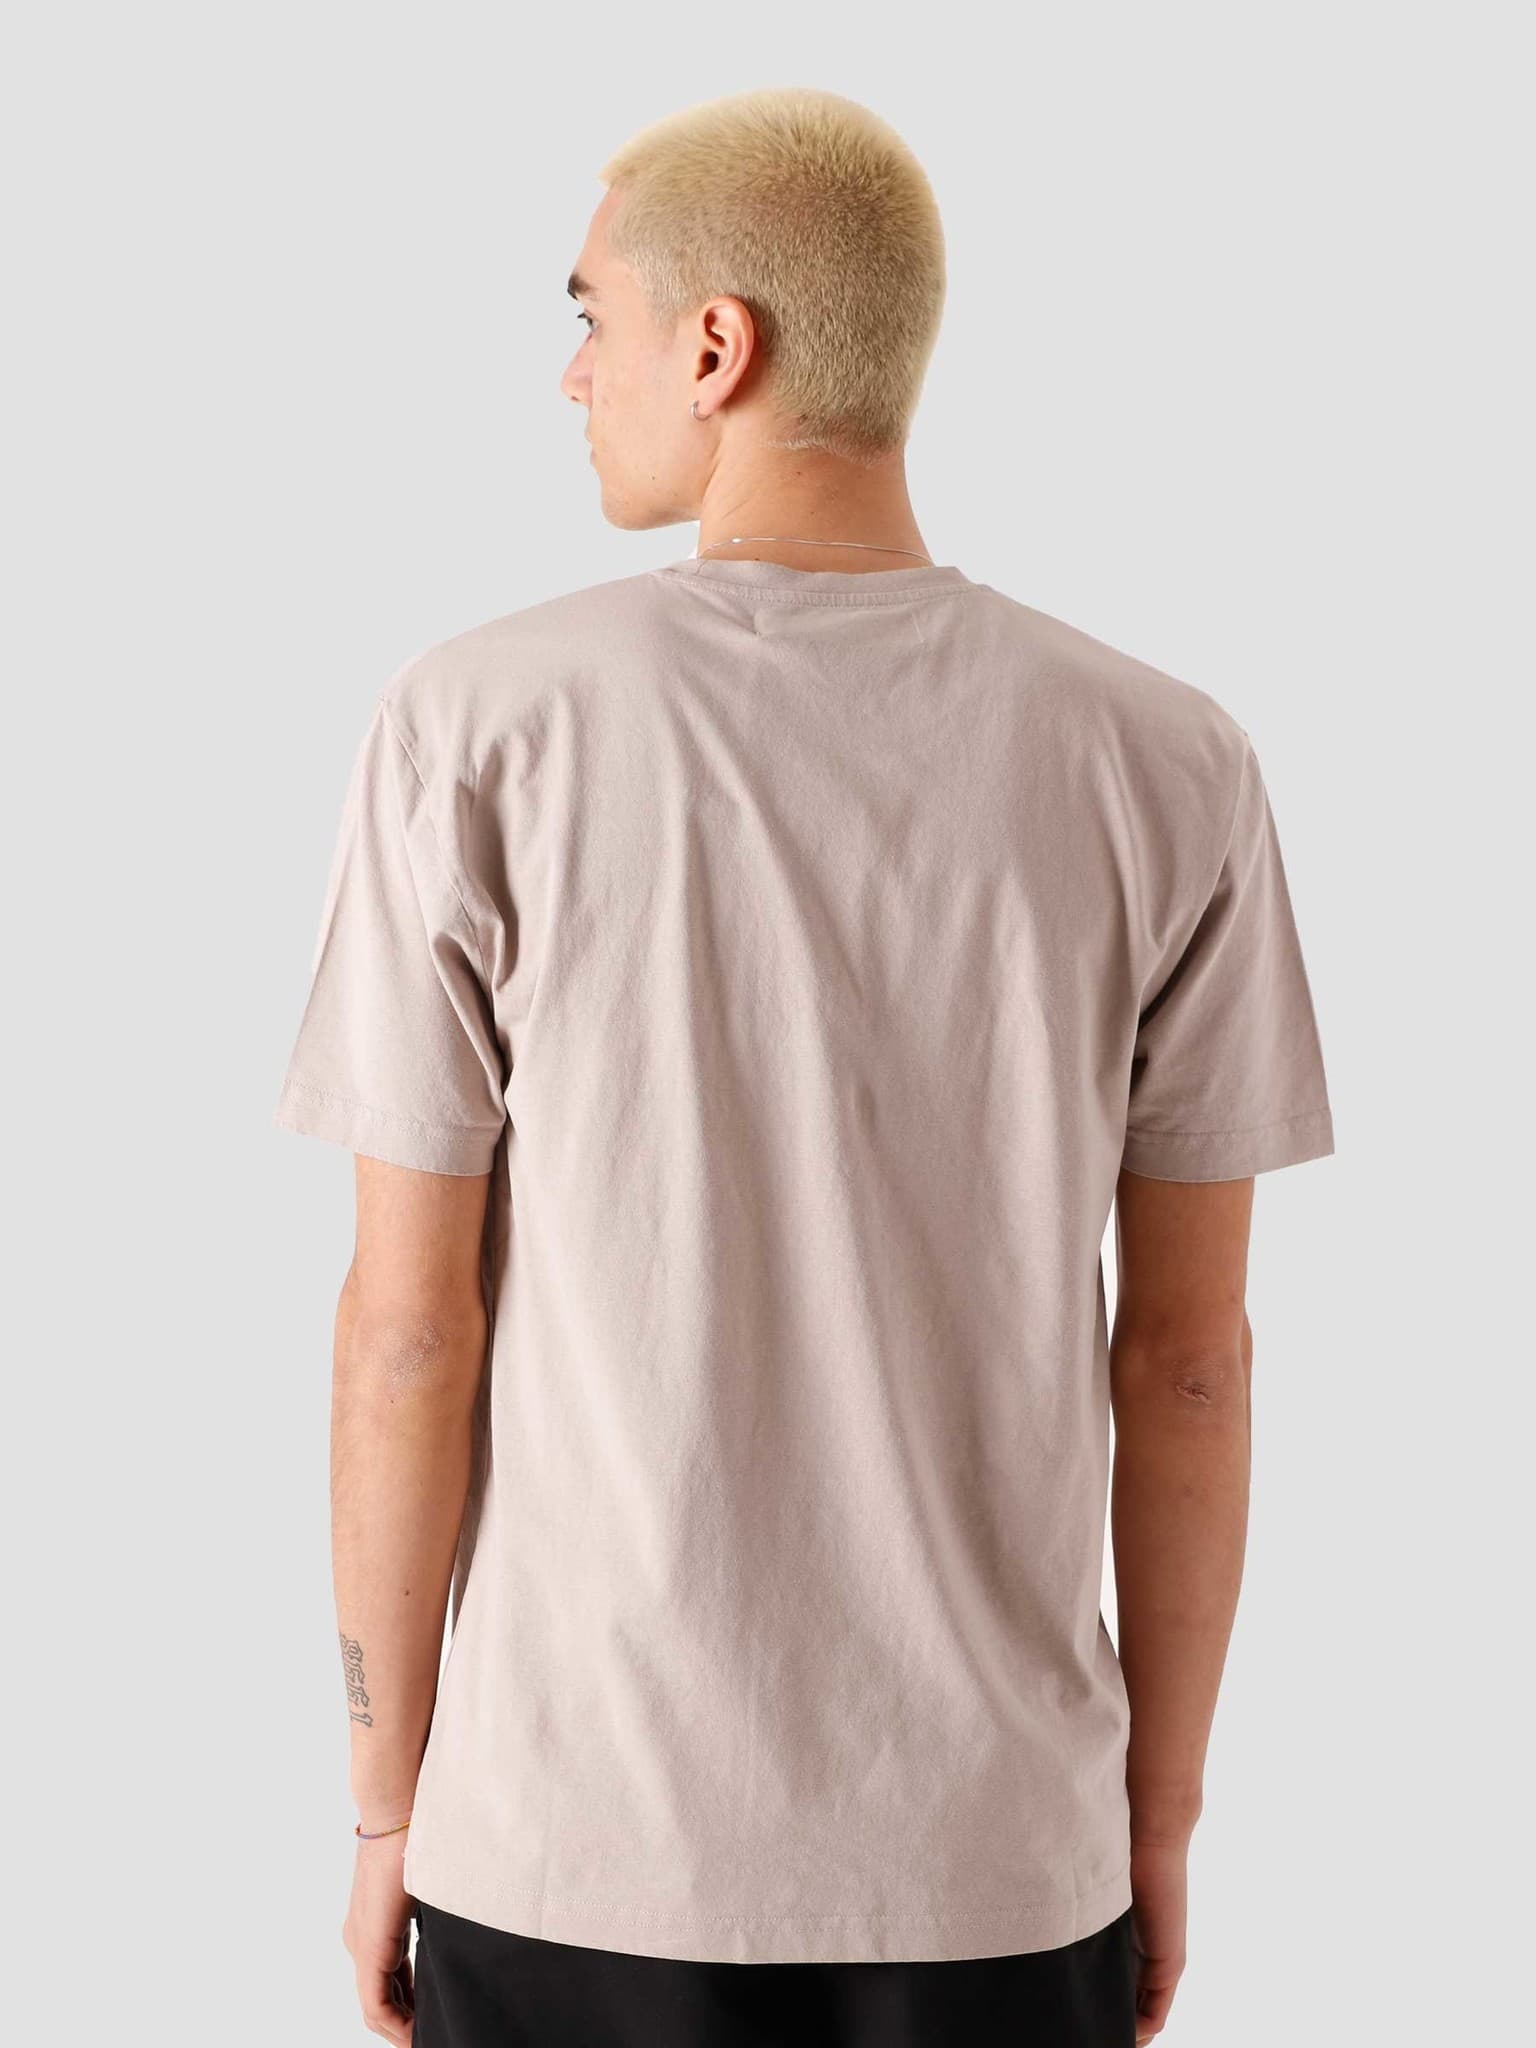 Cut T-Shirt Taupe 2021029